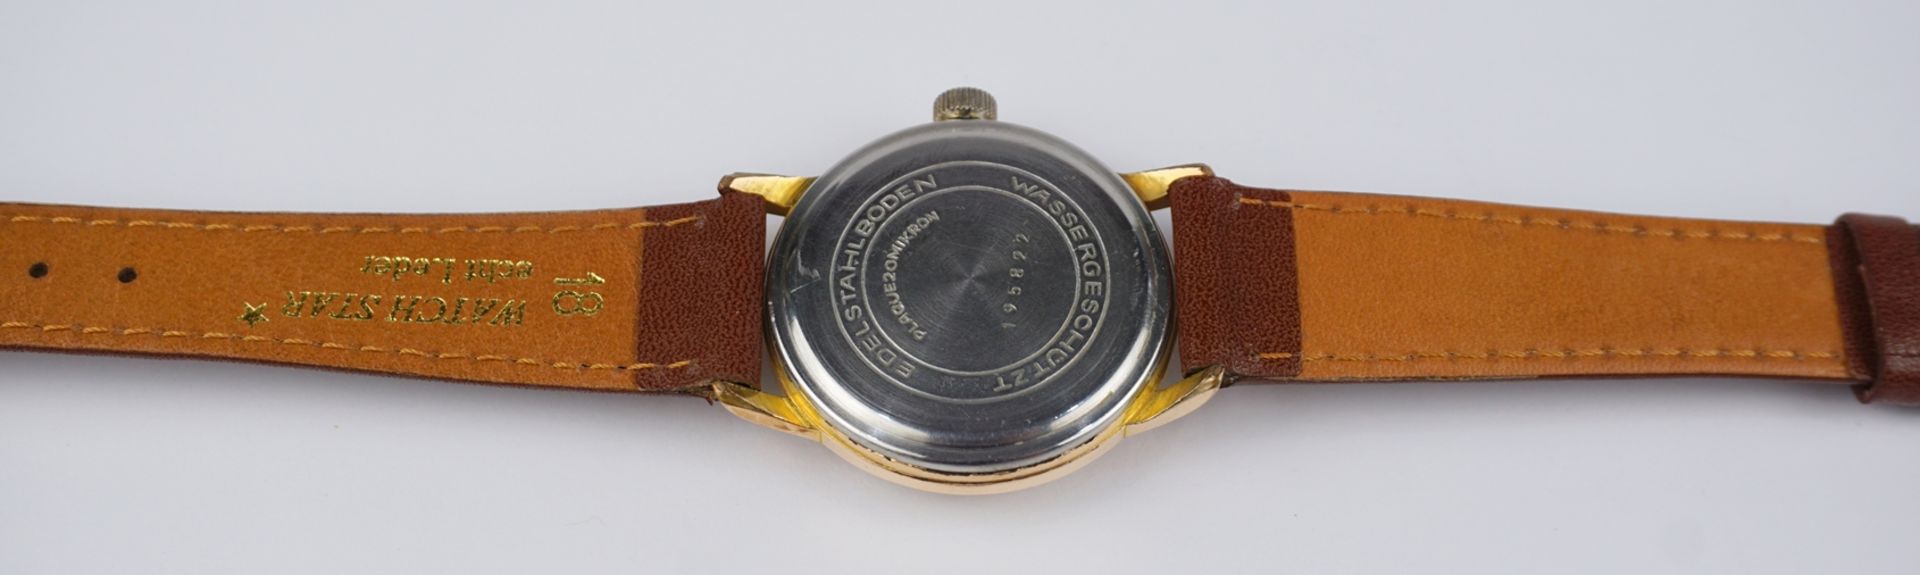 klassische Armbanduhr, GUB Glashütte Kal. 70.1, 1960er Jahre - Bild 3 aus 5